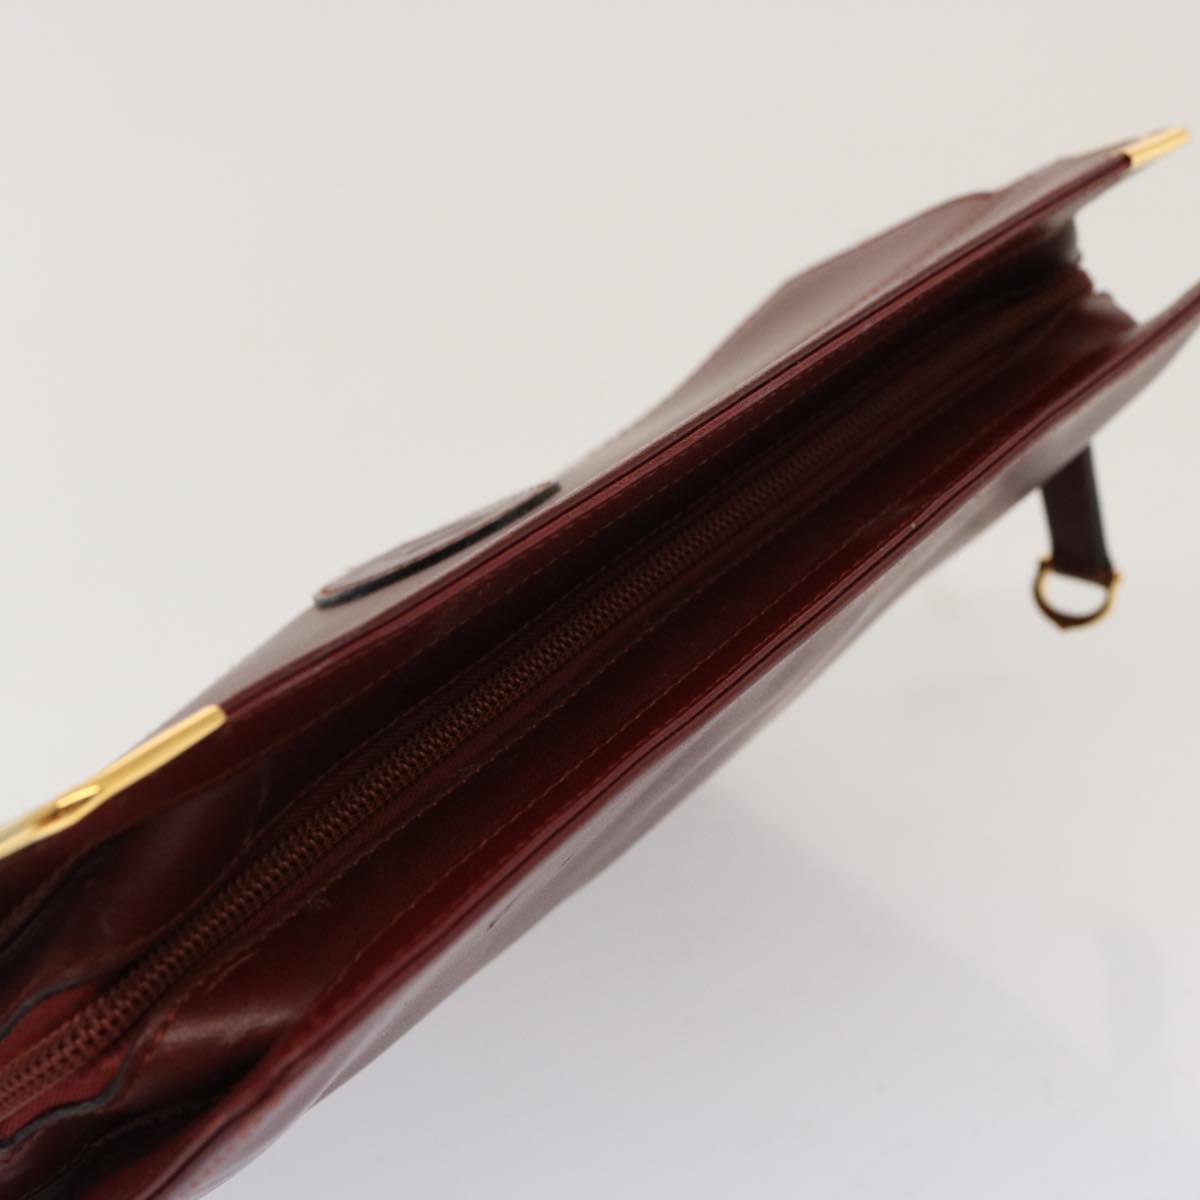 CARTIER Clutch Bag Shoulder Bag Leather 2Set Wine Red Auth 68344